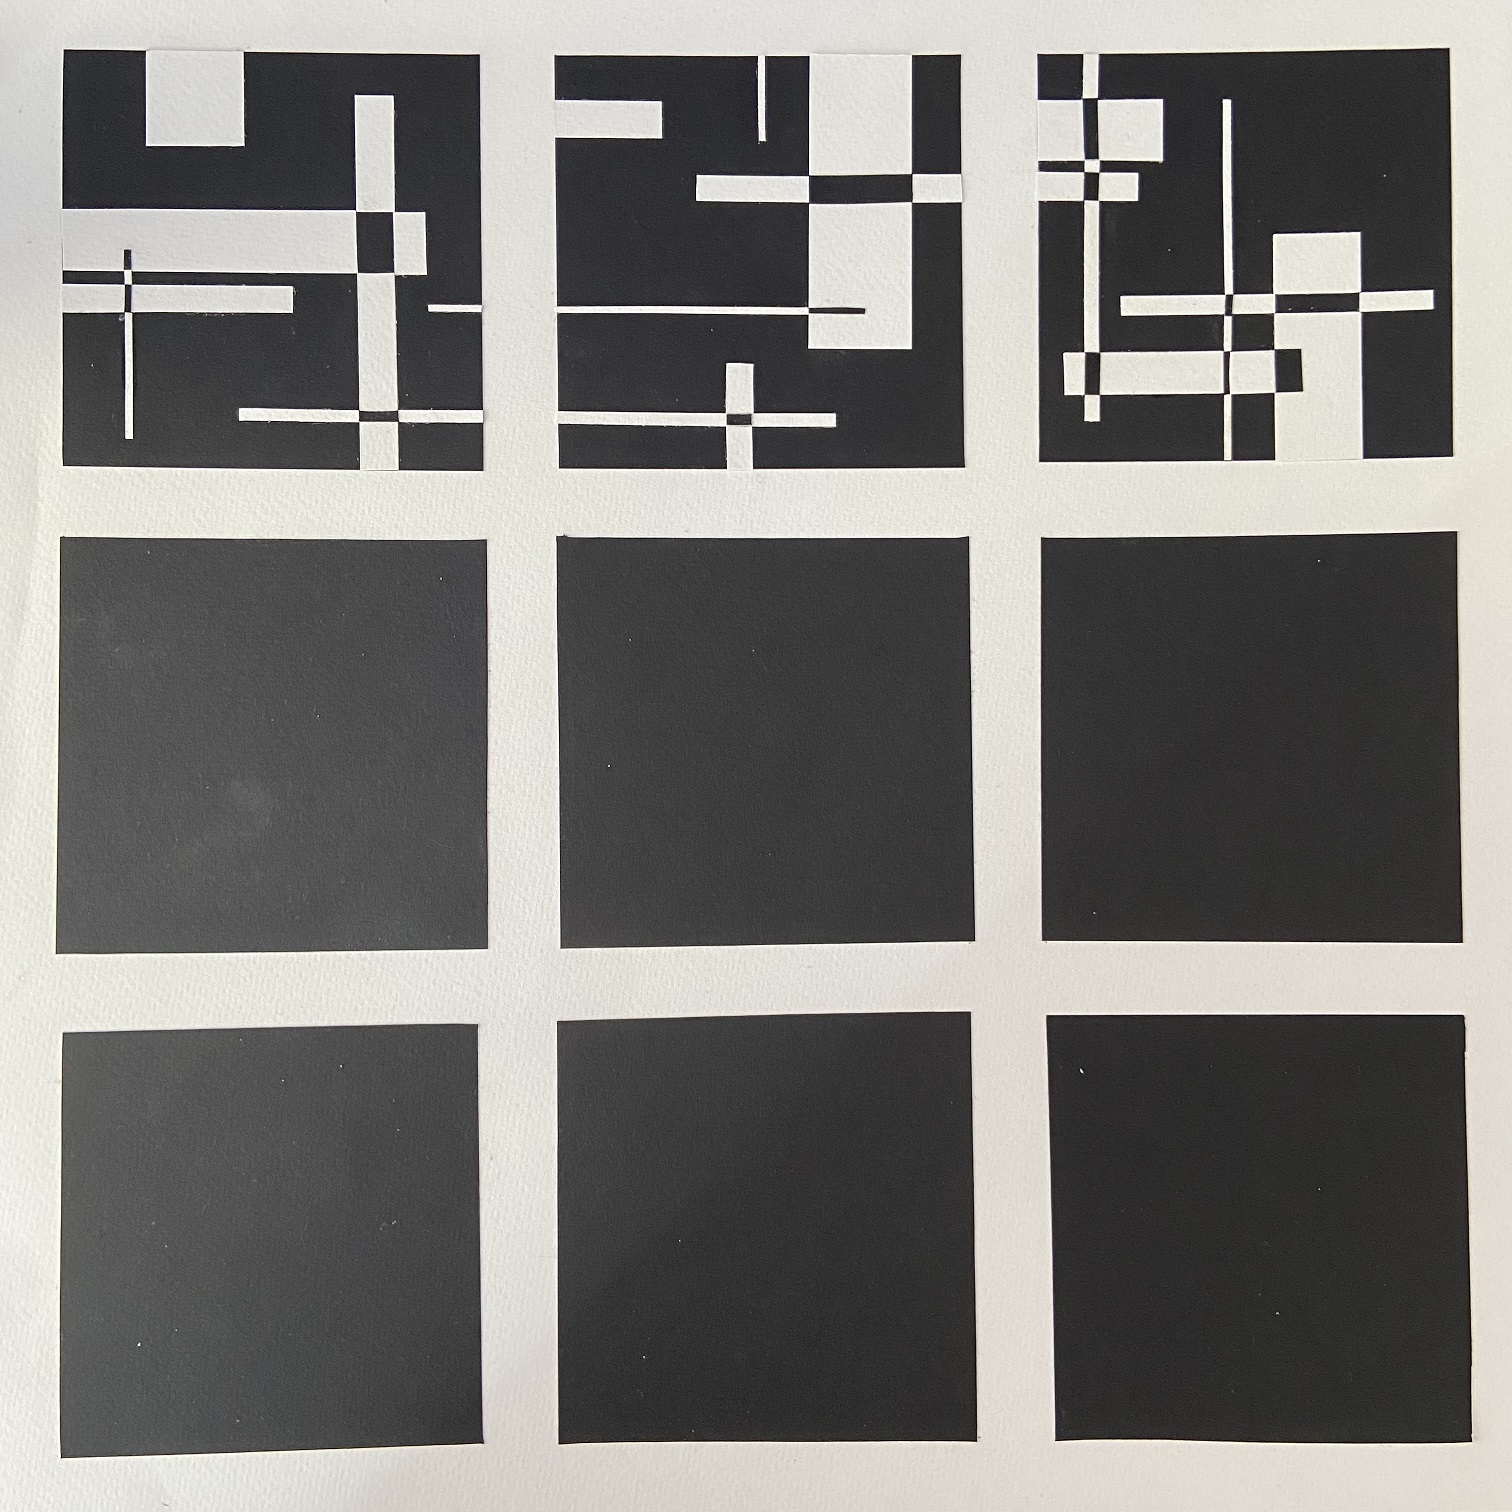 9×9 Grid (Top 3 Squares)